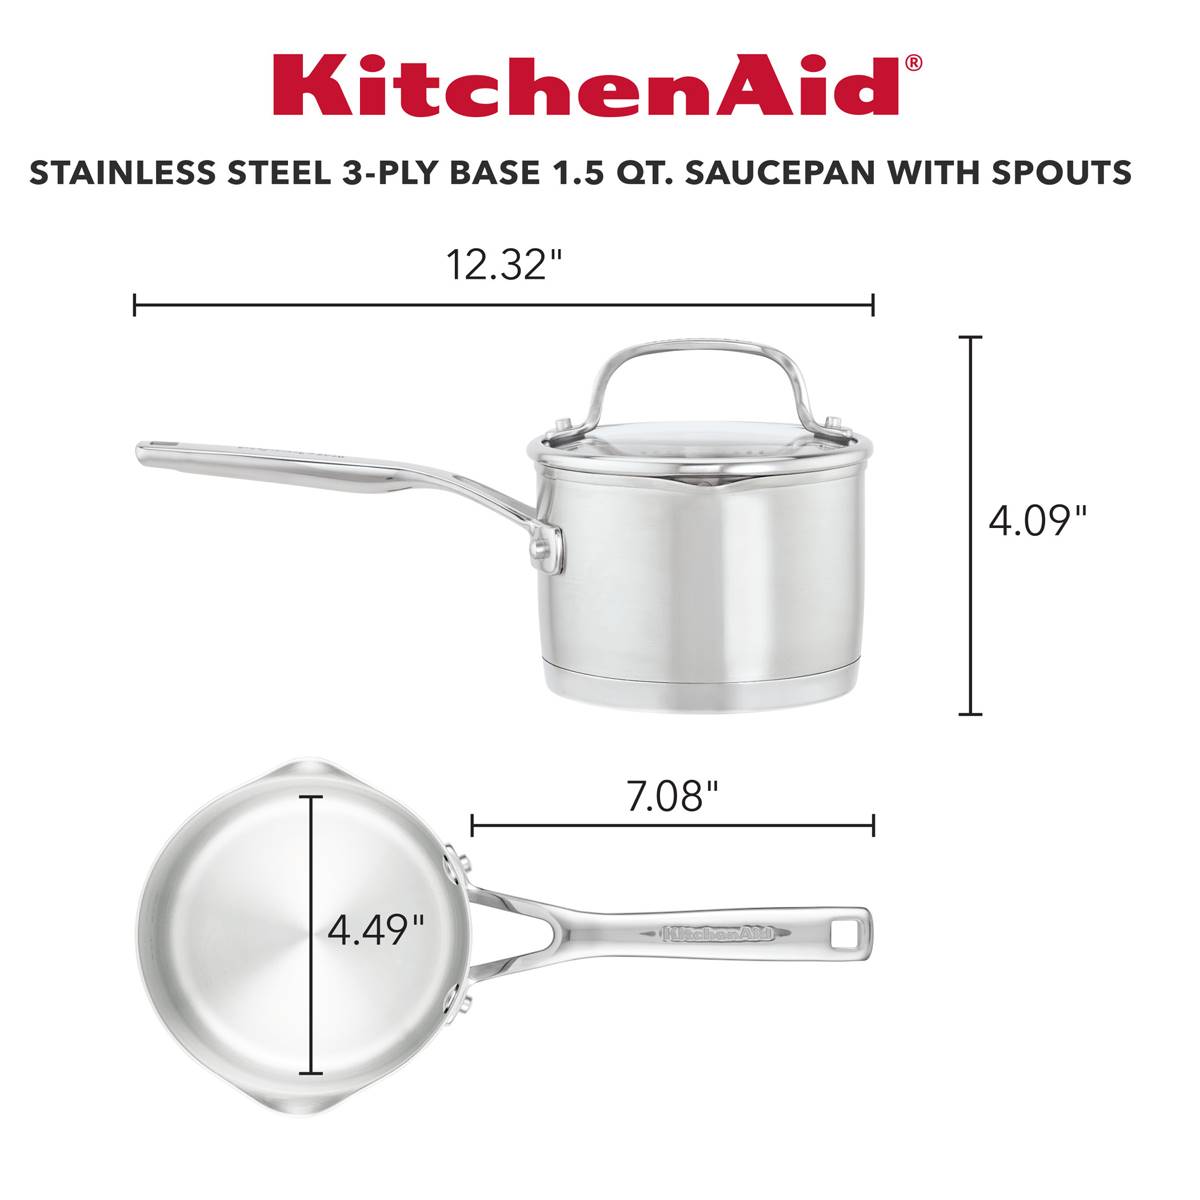 KitchenAid(R) Stainless Steel 3-Ply Base 1.5qt. Saucepan